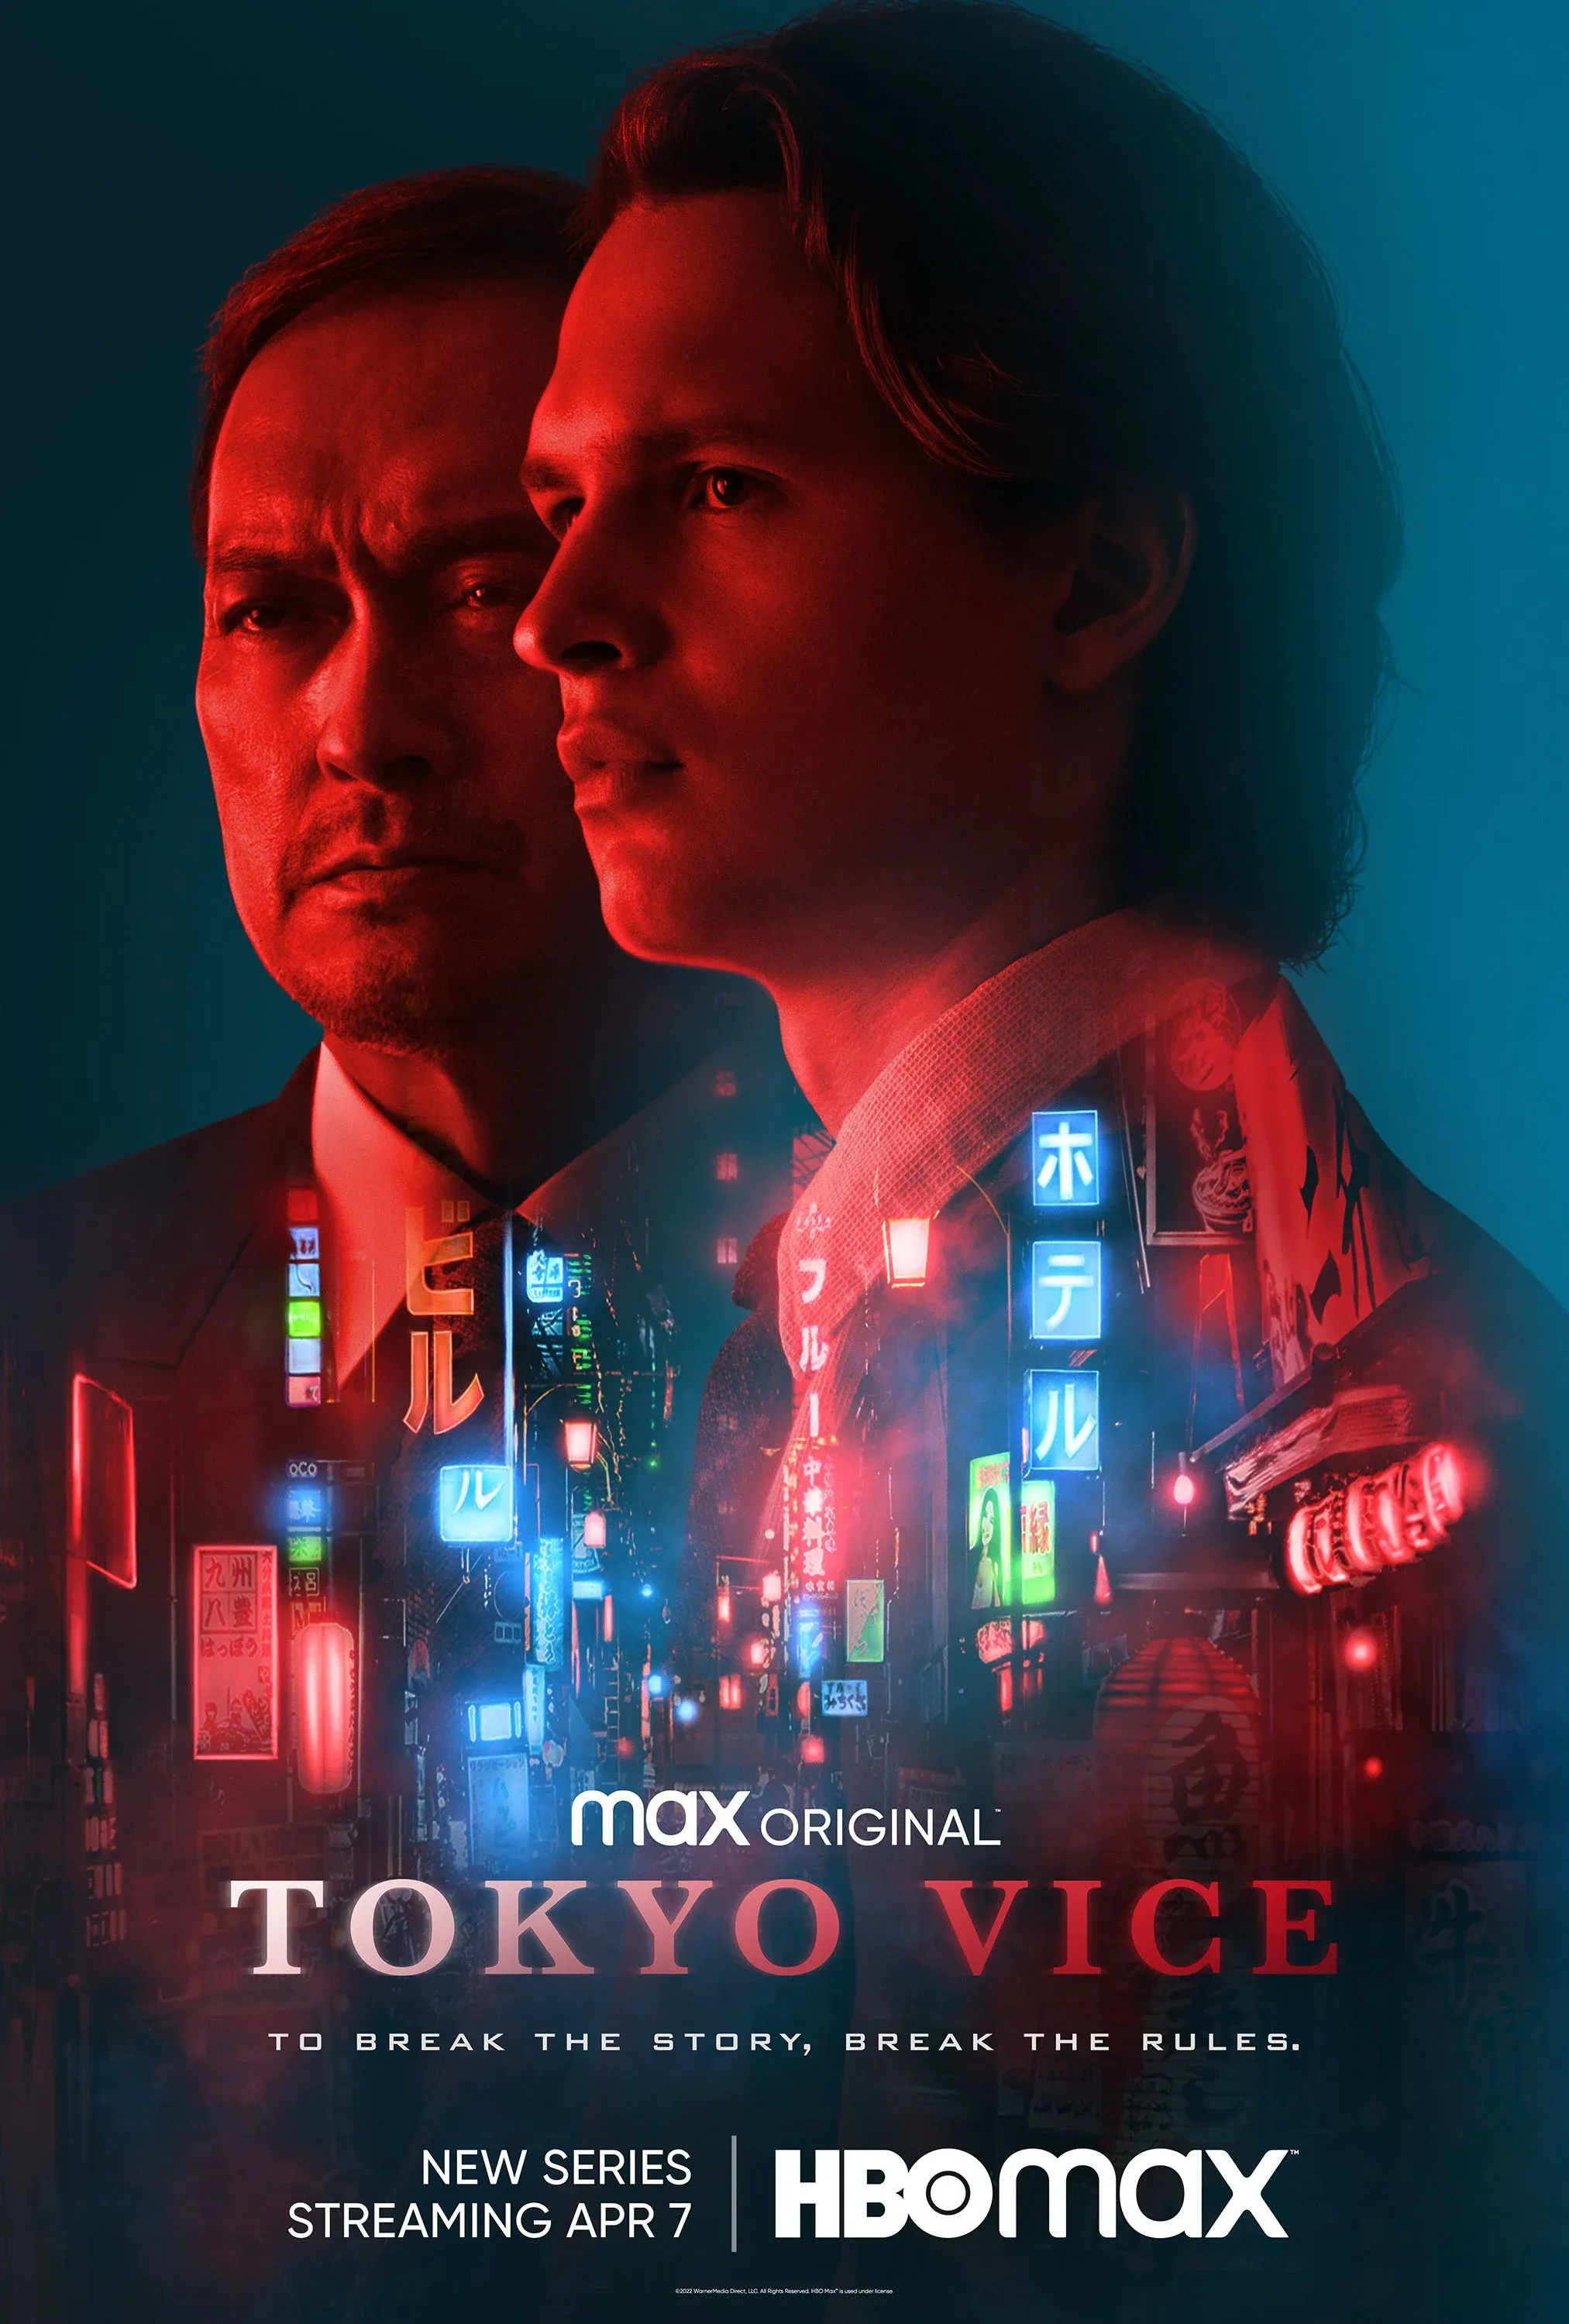 Michael Mann directs Tokyo Vice starring Ansel Elgort and Ken Watanabe